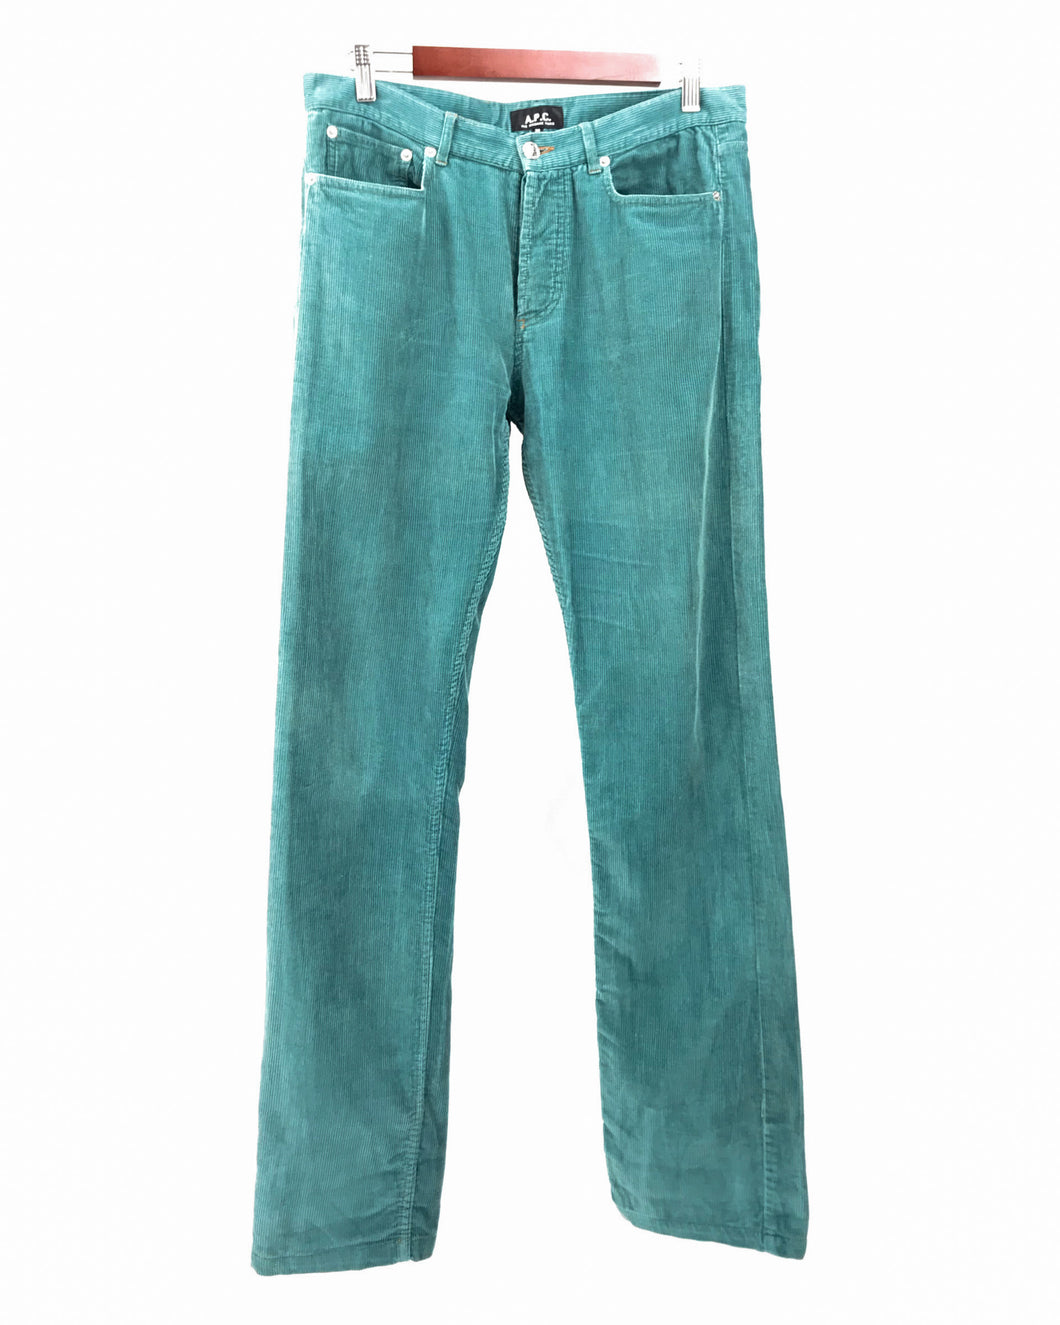 APC Turquoise Corduroy Pants (30-32)